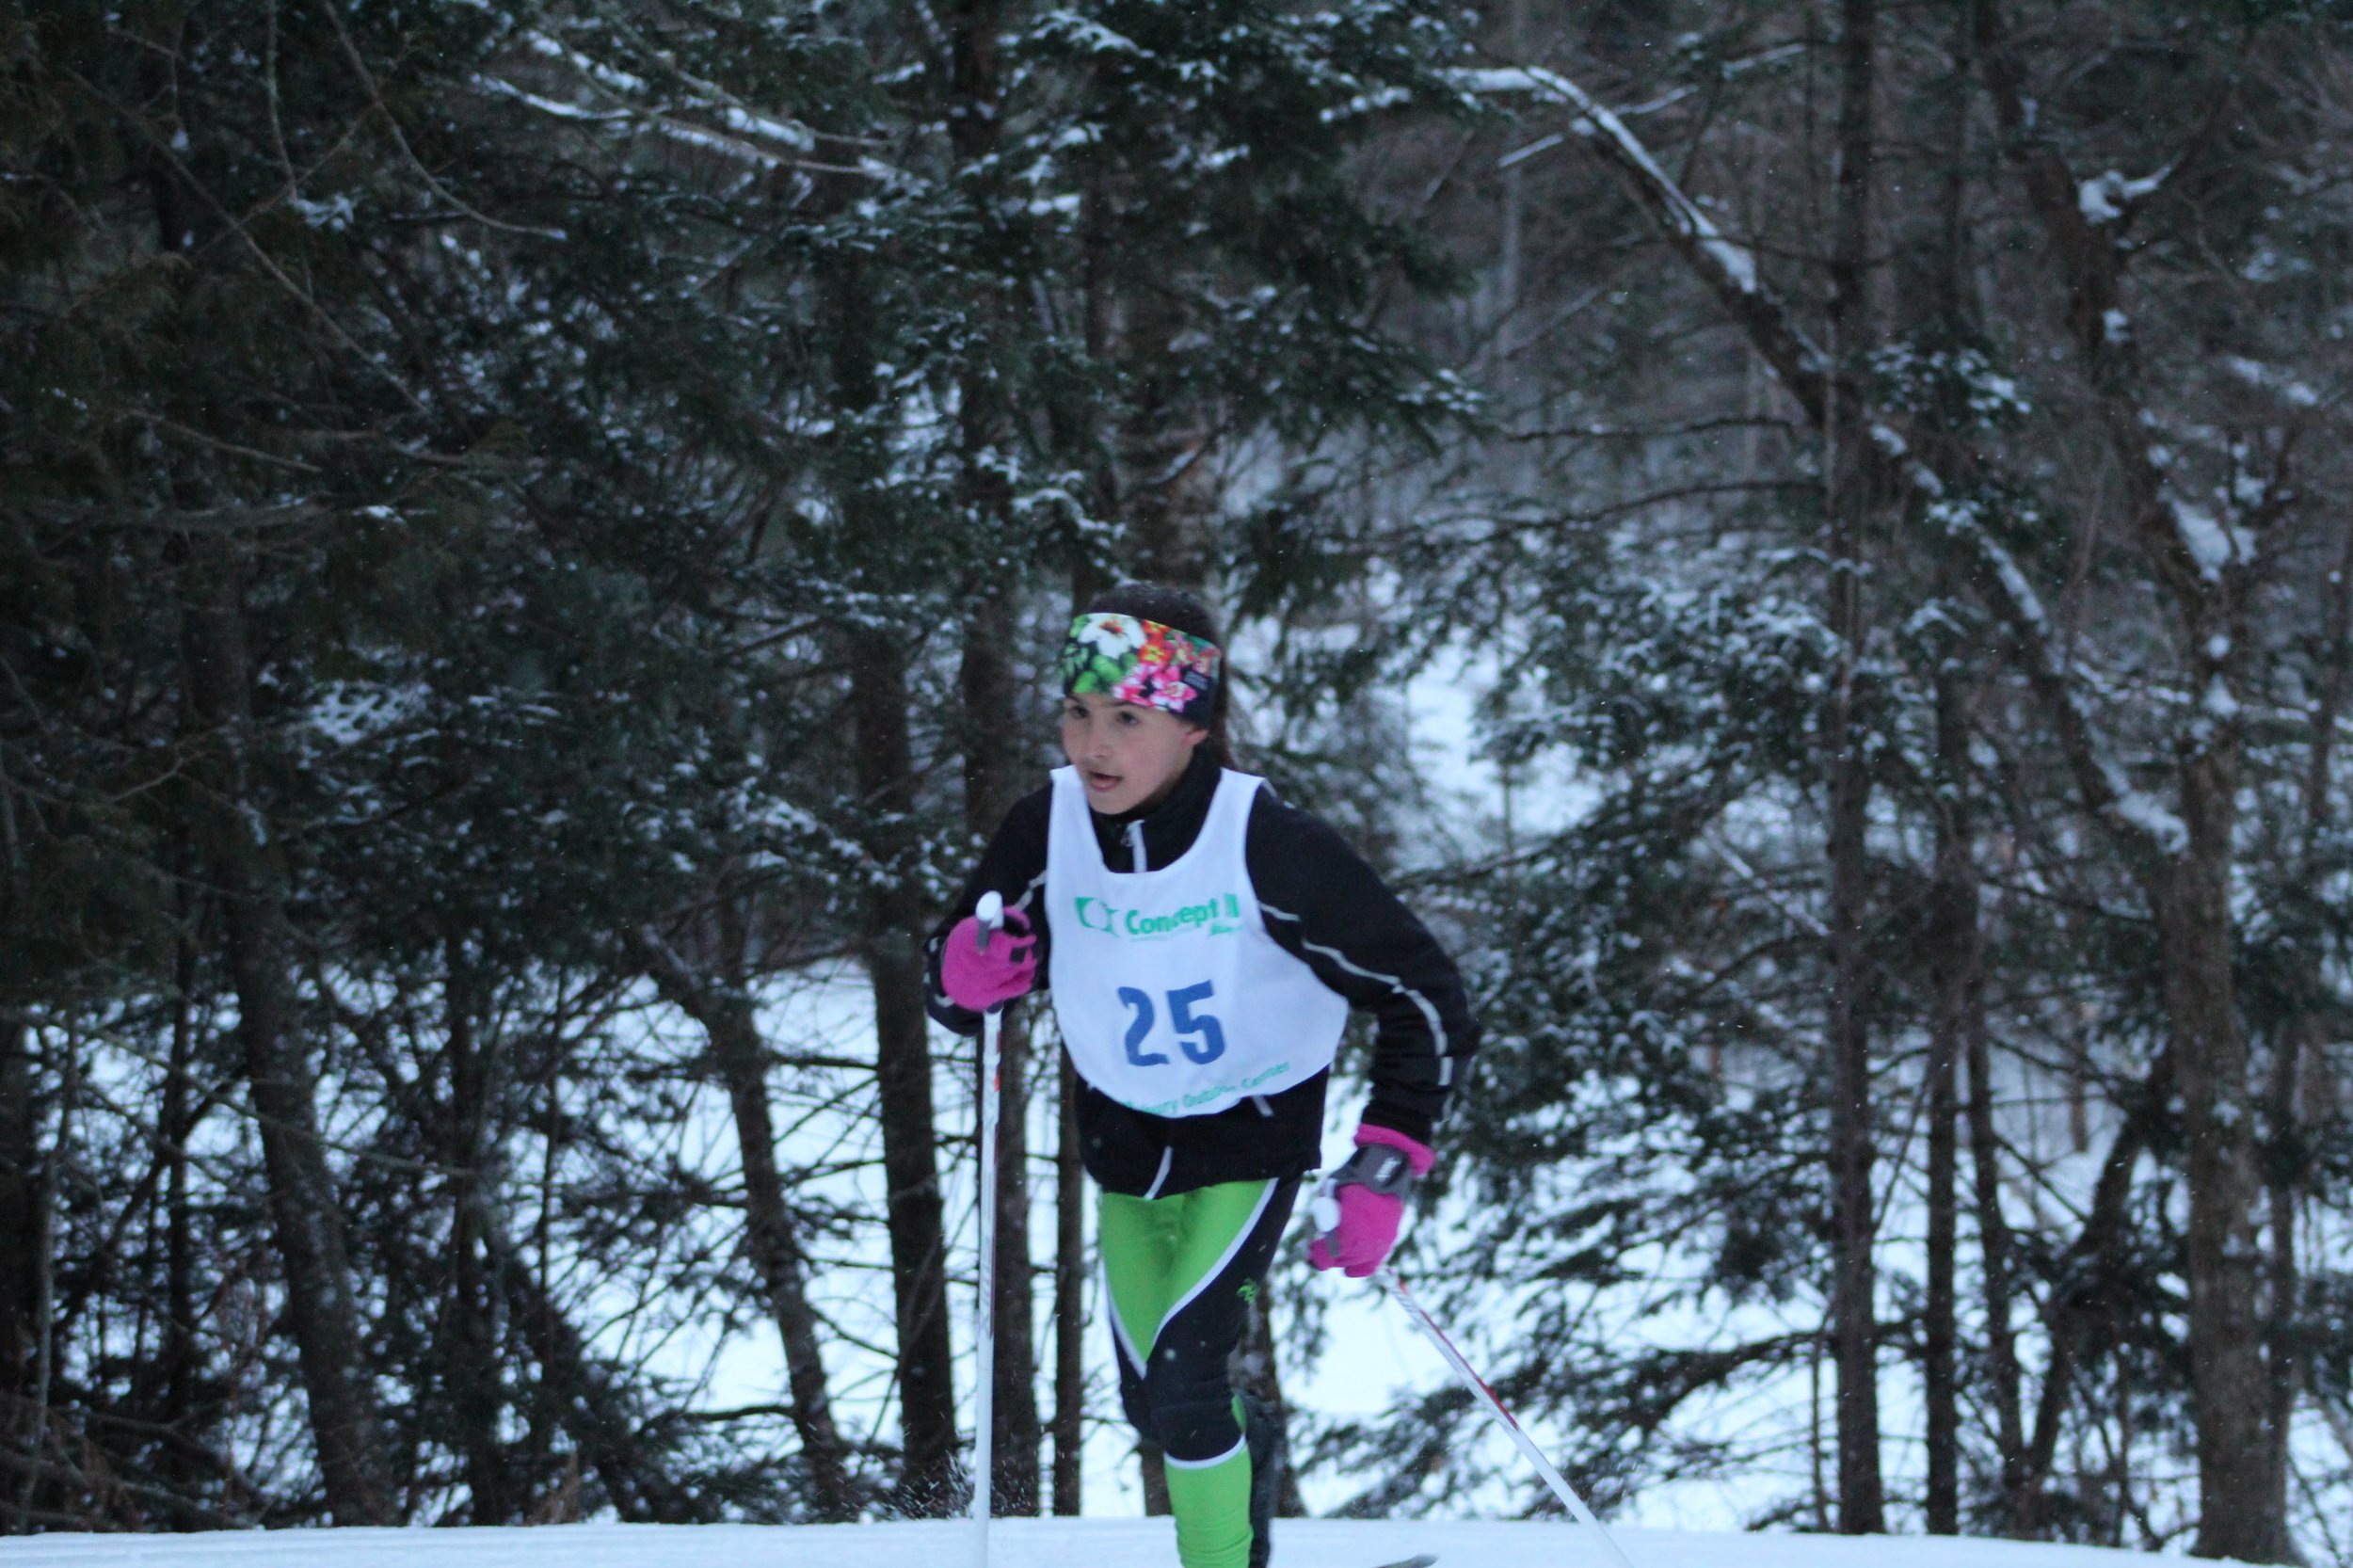 Junior skier Amelia Circosta